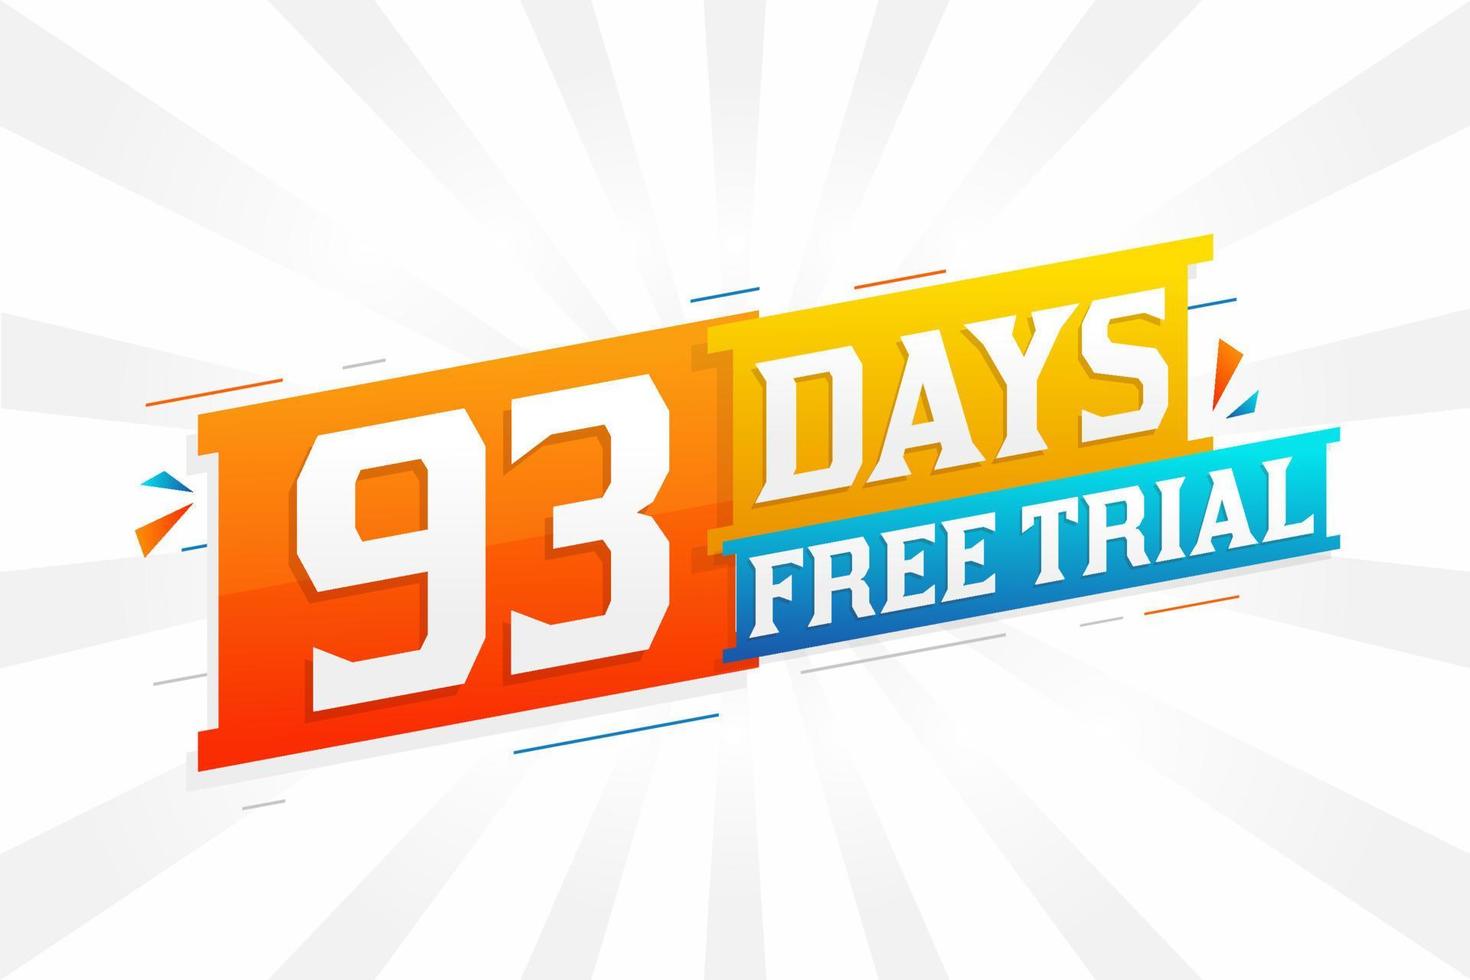 Vector de stock de texto en negrita promocional de prueba gratuita de 93 días